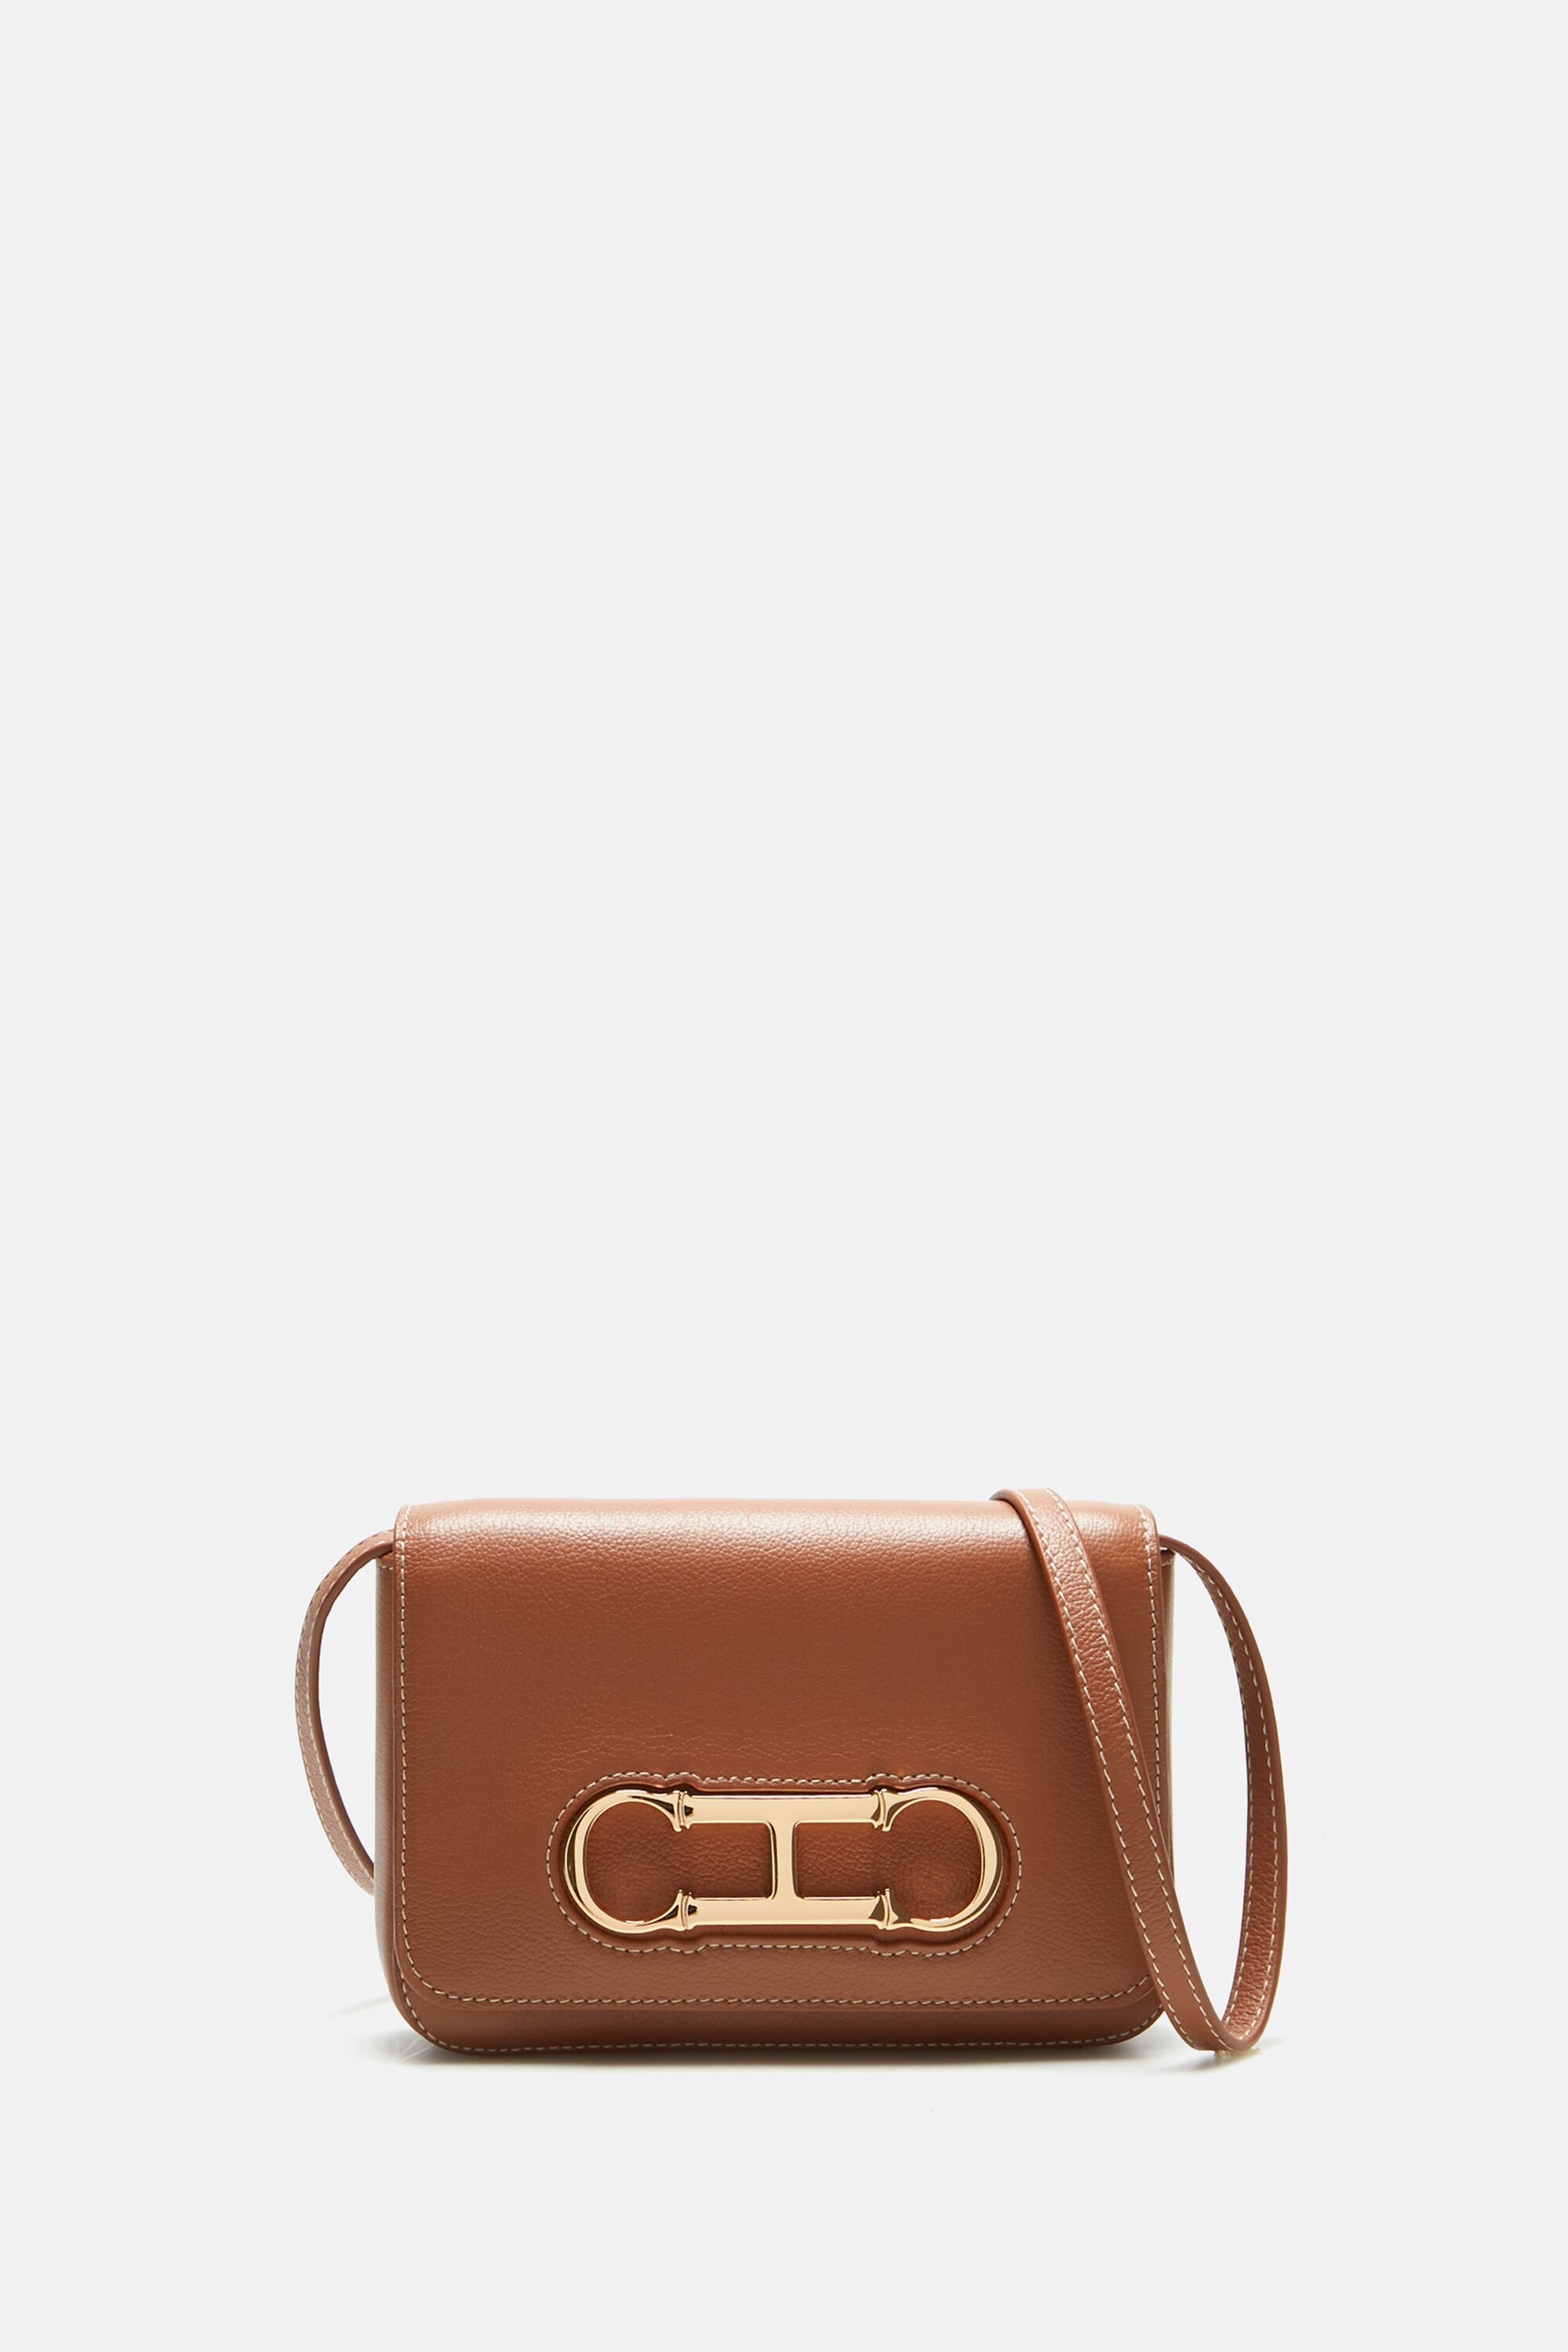 Tiny Doma Insignia Satchel  Mini handbag cognac - CH Carolina Herrera  United States